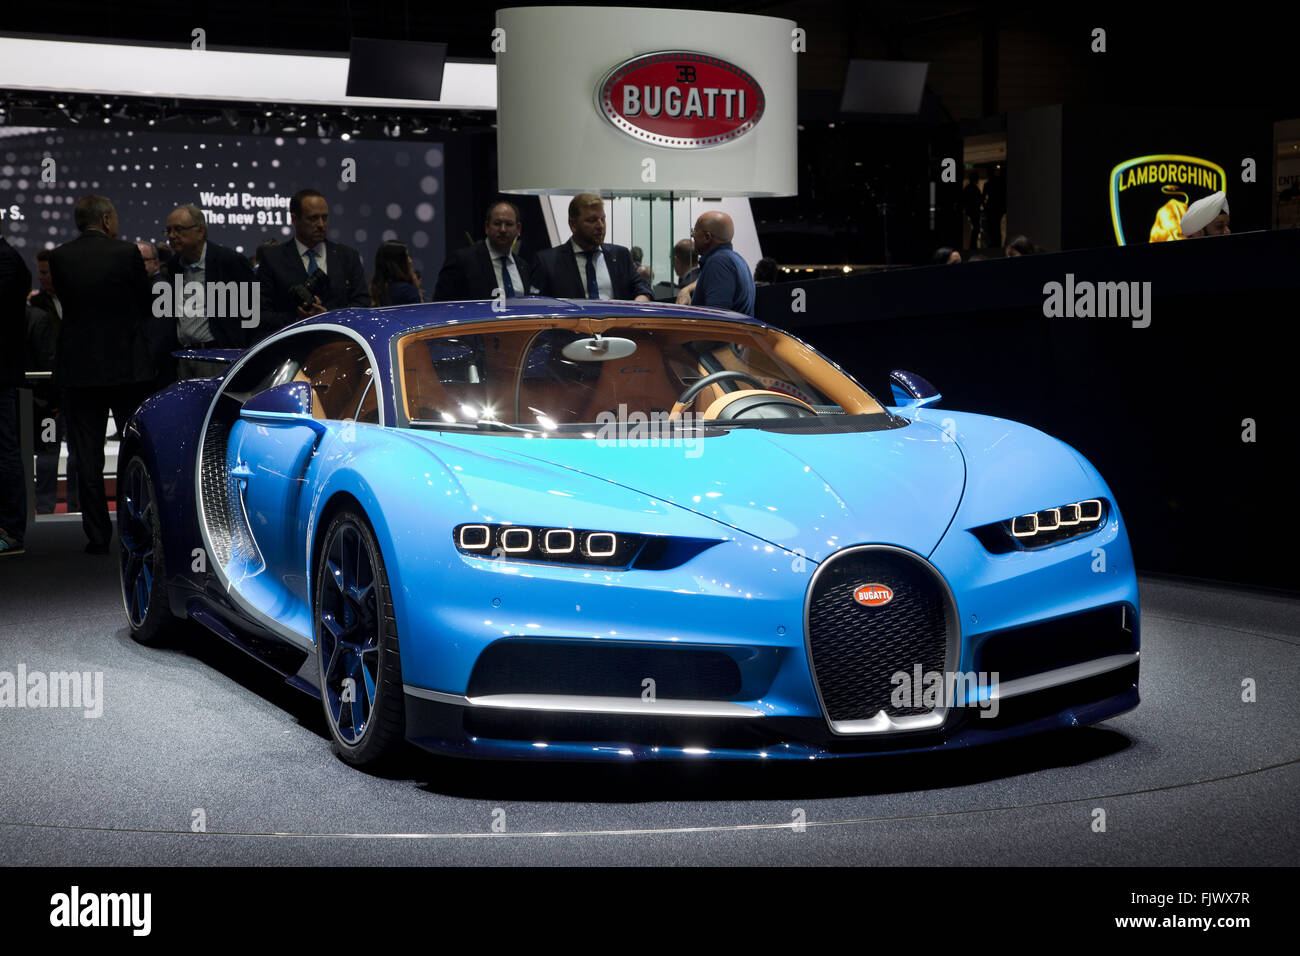 Bugatti Chiron revealed at the Geneva Motor Show 2016.  The world's new fastest production car. Stock Photo